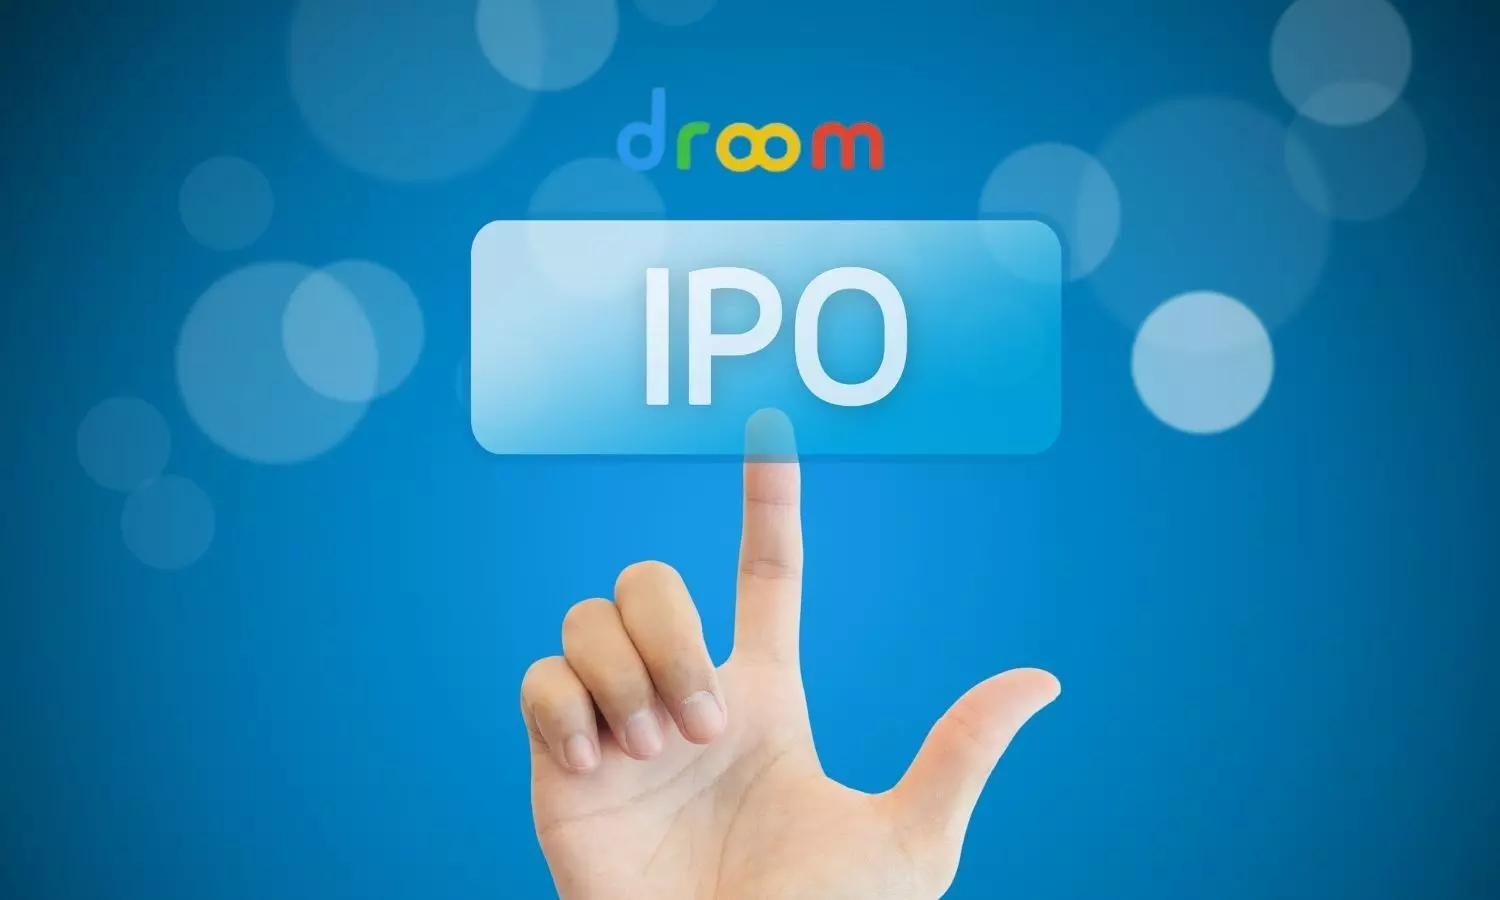 Droom IPO